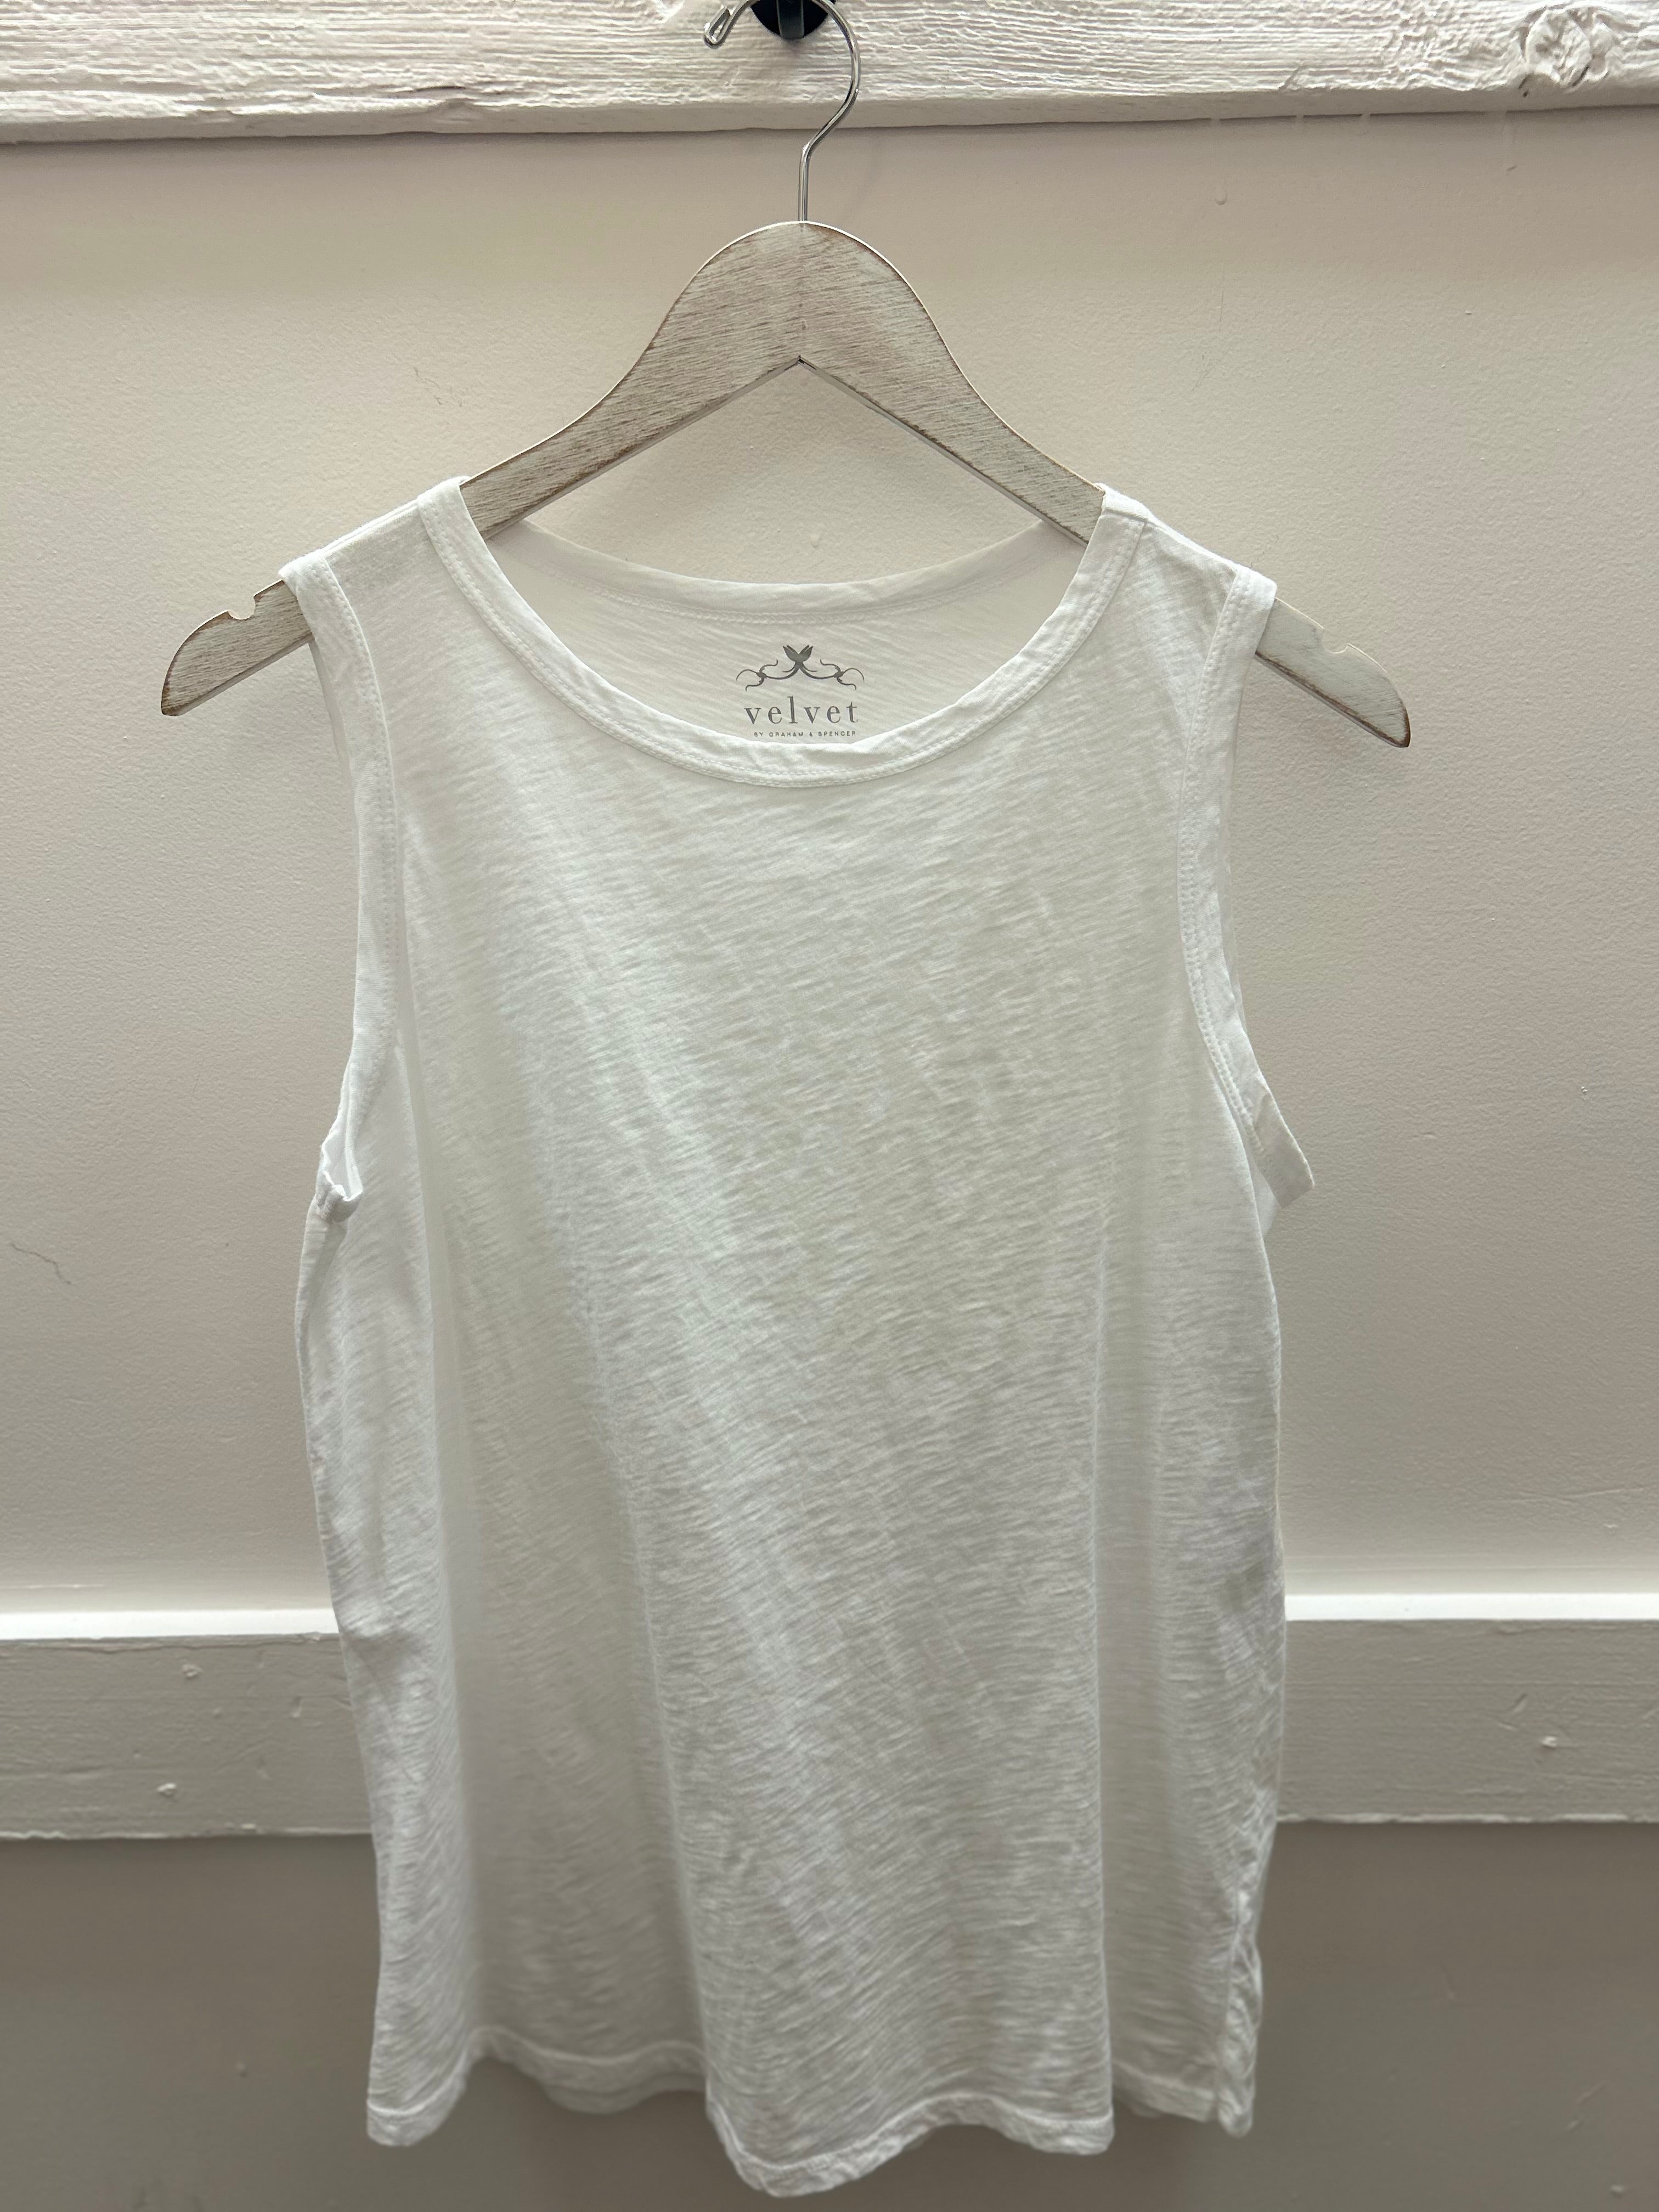 Velvet Taurus Slub Crewneck Tank - White Clothing - Tops - Shirts - SS Knits - Sleeveless Knits by Velvet | Grace the Boutique